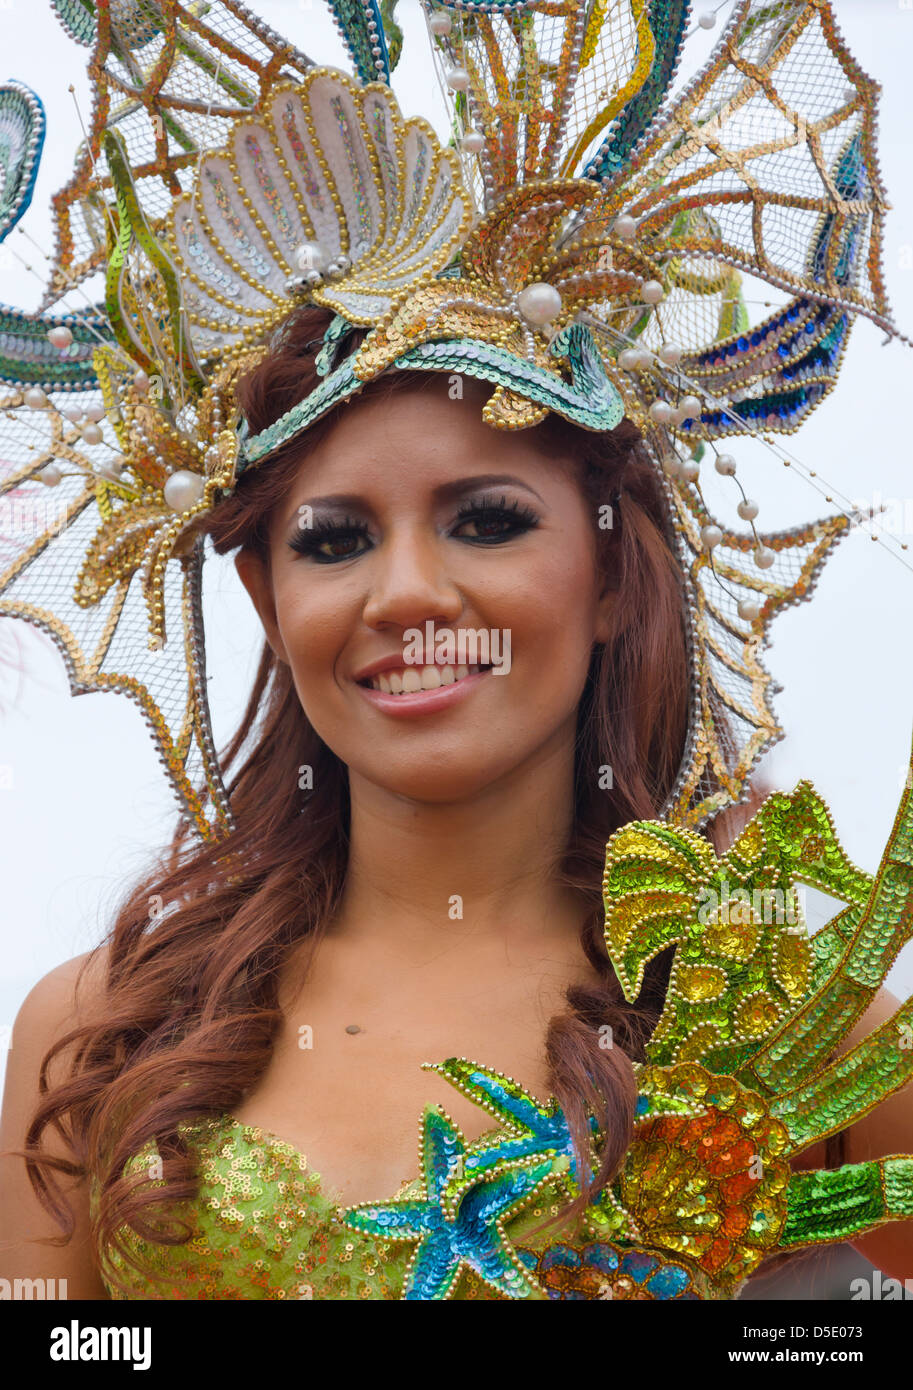 Interprètes en costume de carnaval, Veracruz, Mexique Banque D'Images